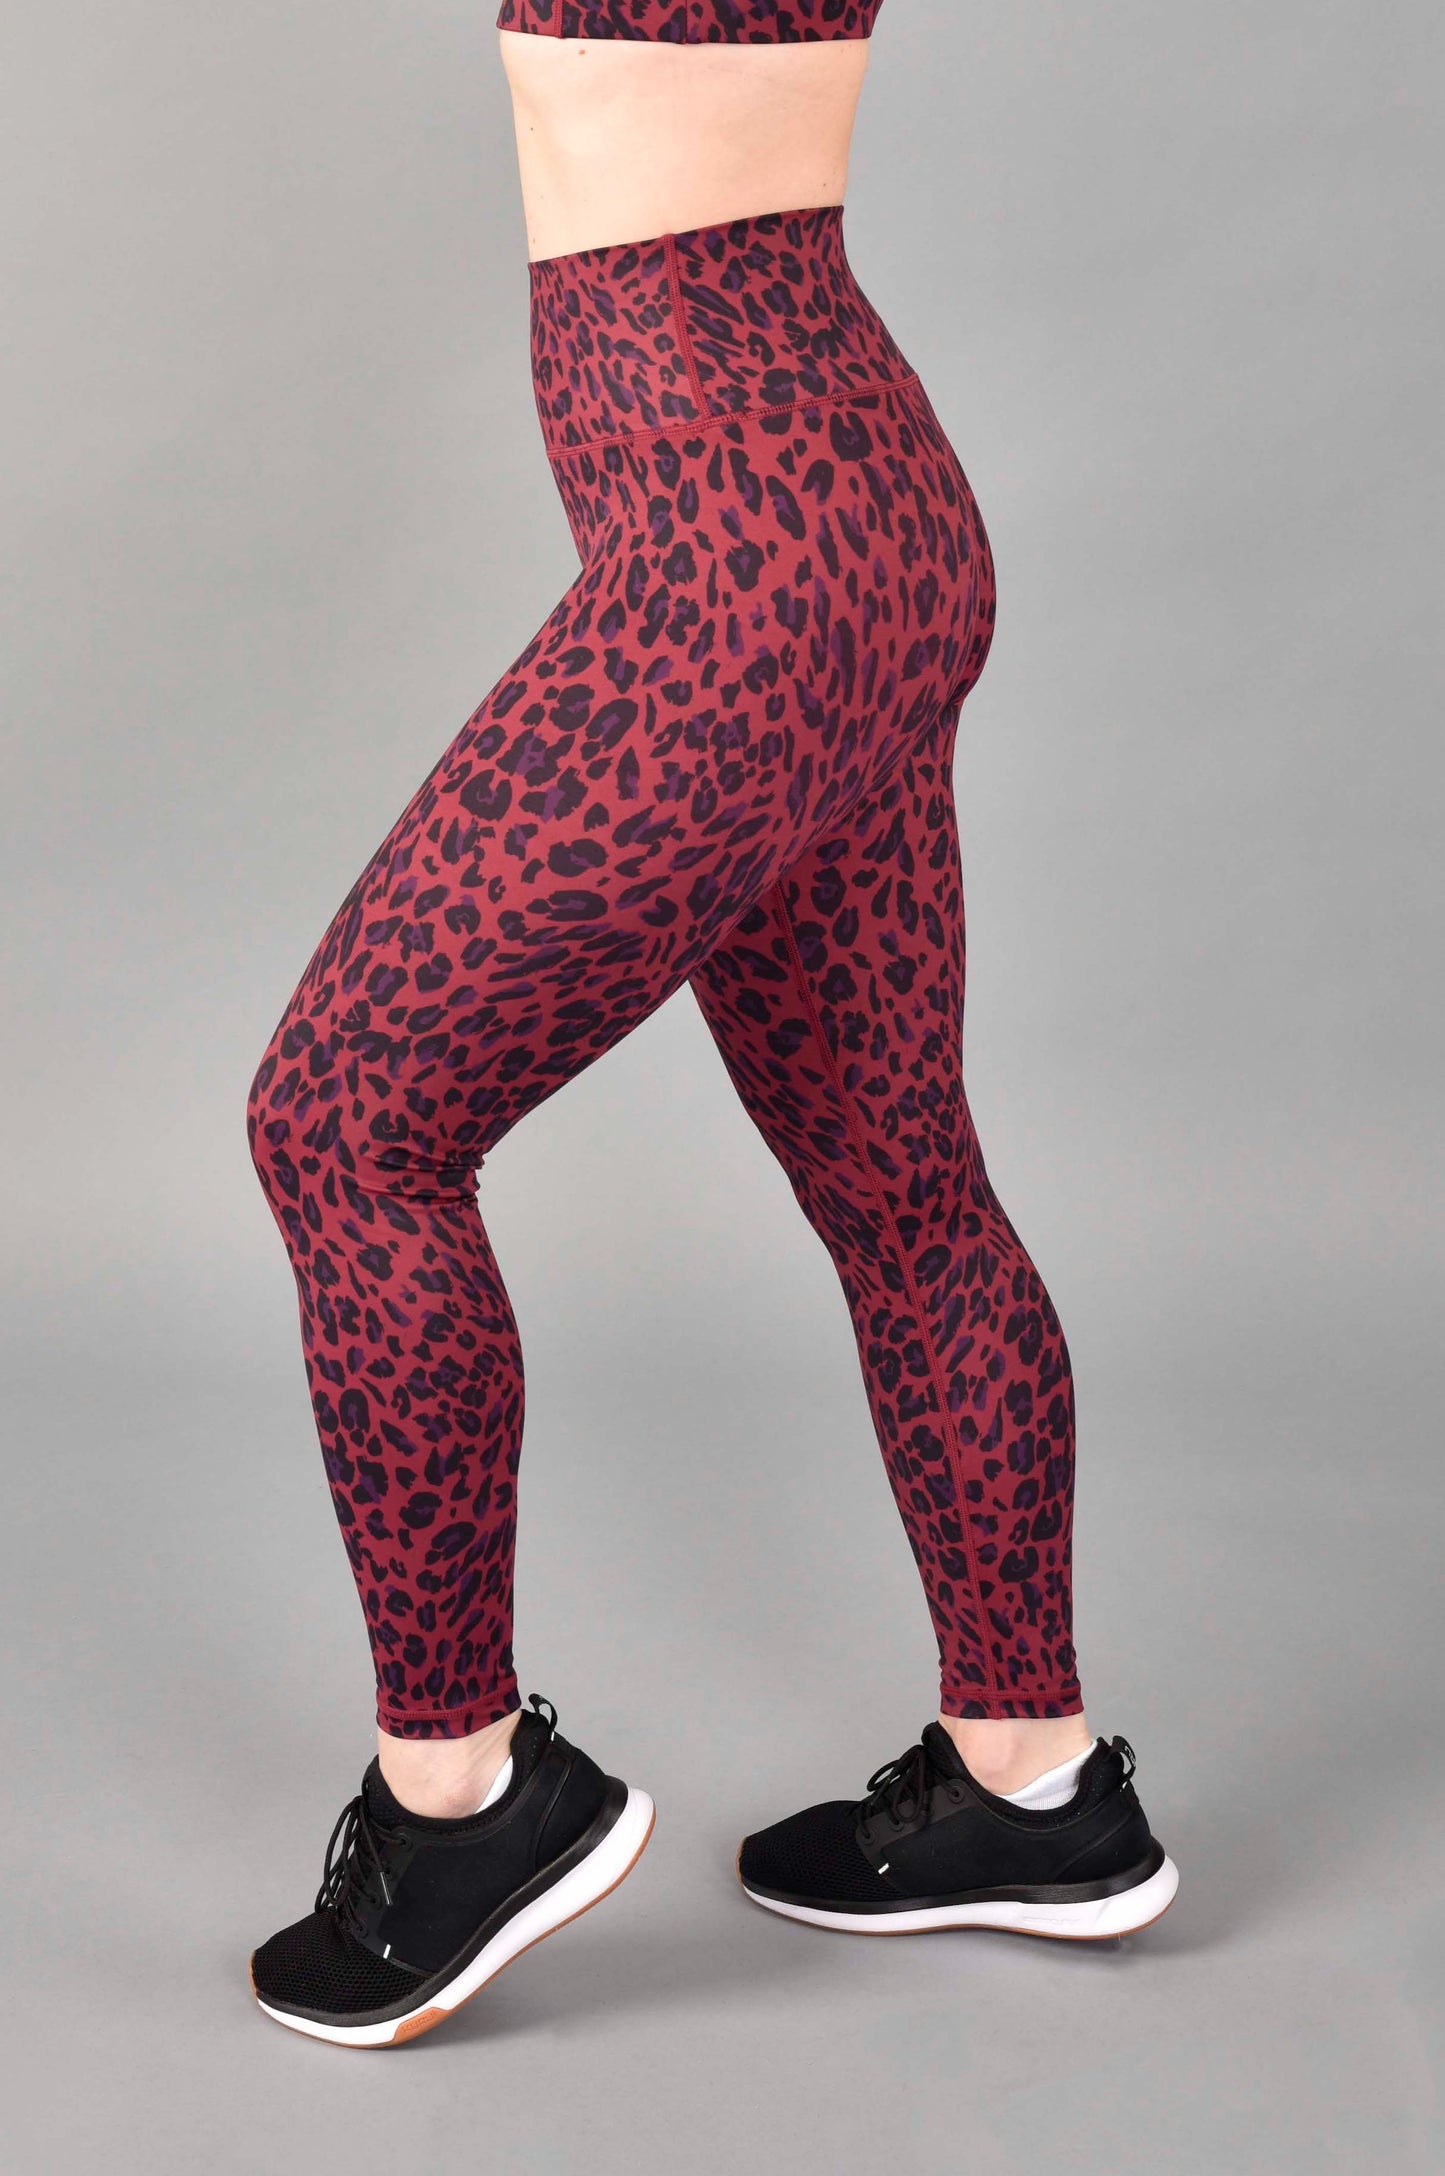 WEAR LOVE MORE Ultra High Rise Recycled Luxe 7/8 Legging in Red Velvet Leopard Print. Sustainable Activewear in Leopard Print. Leopard Print Legging. Best High Waist Leggings